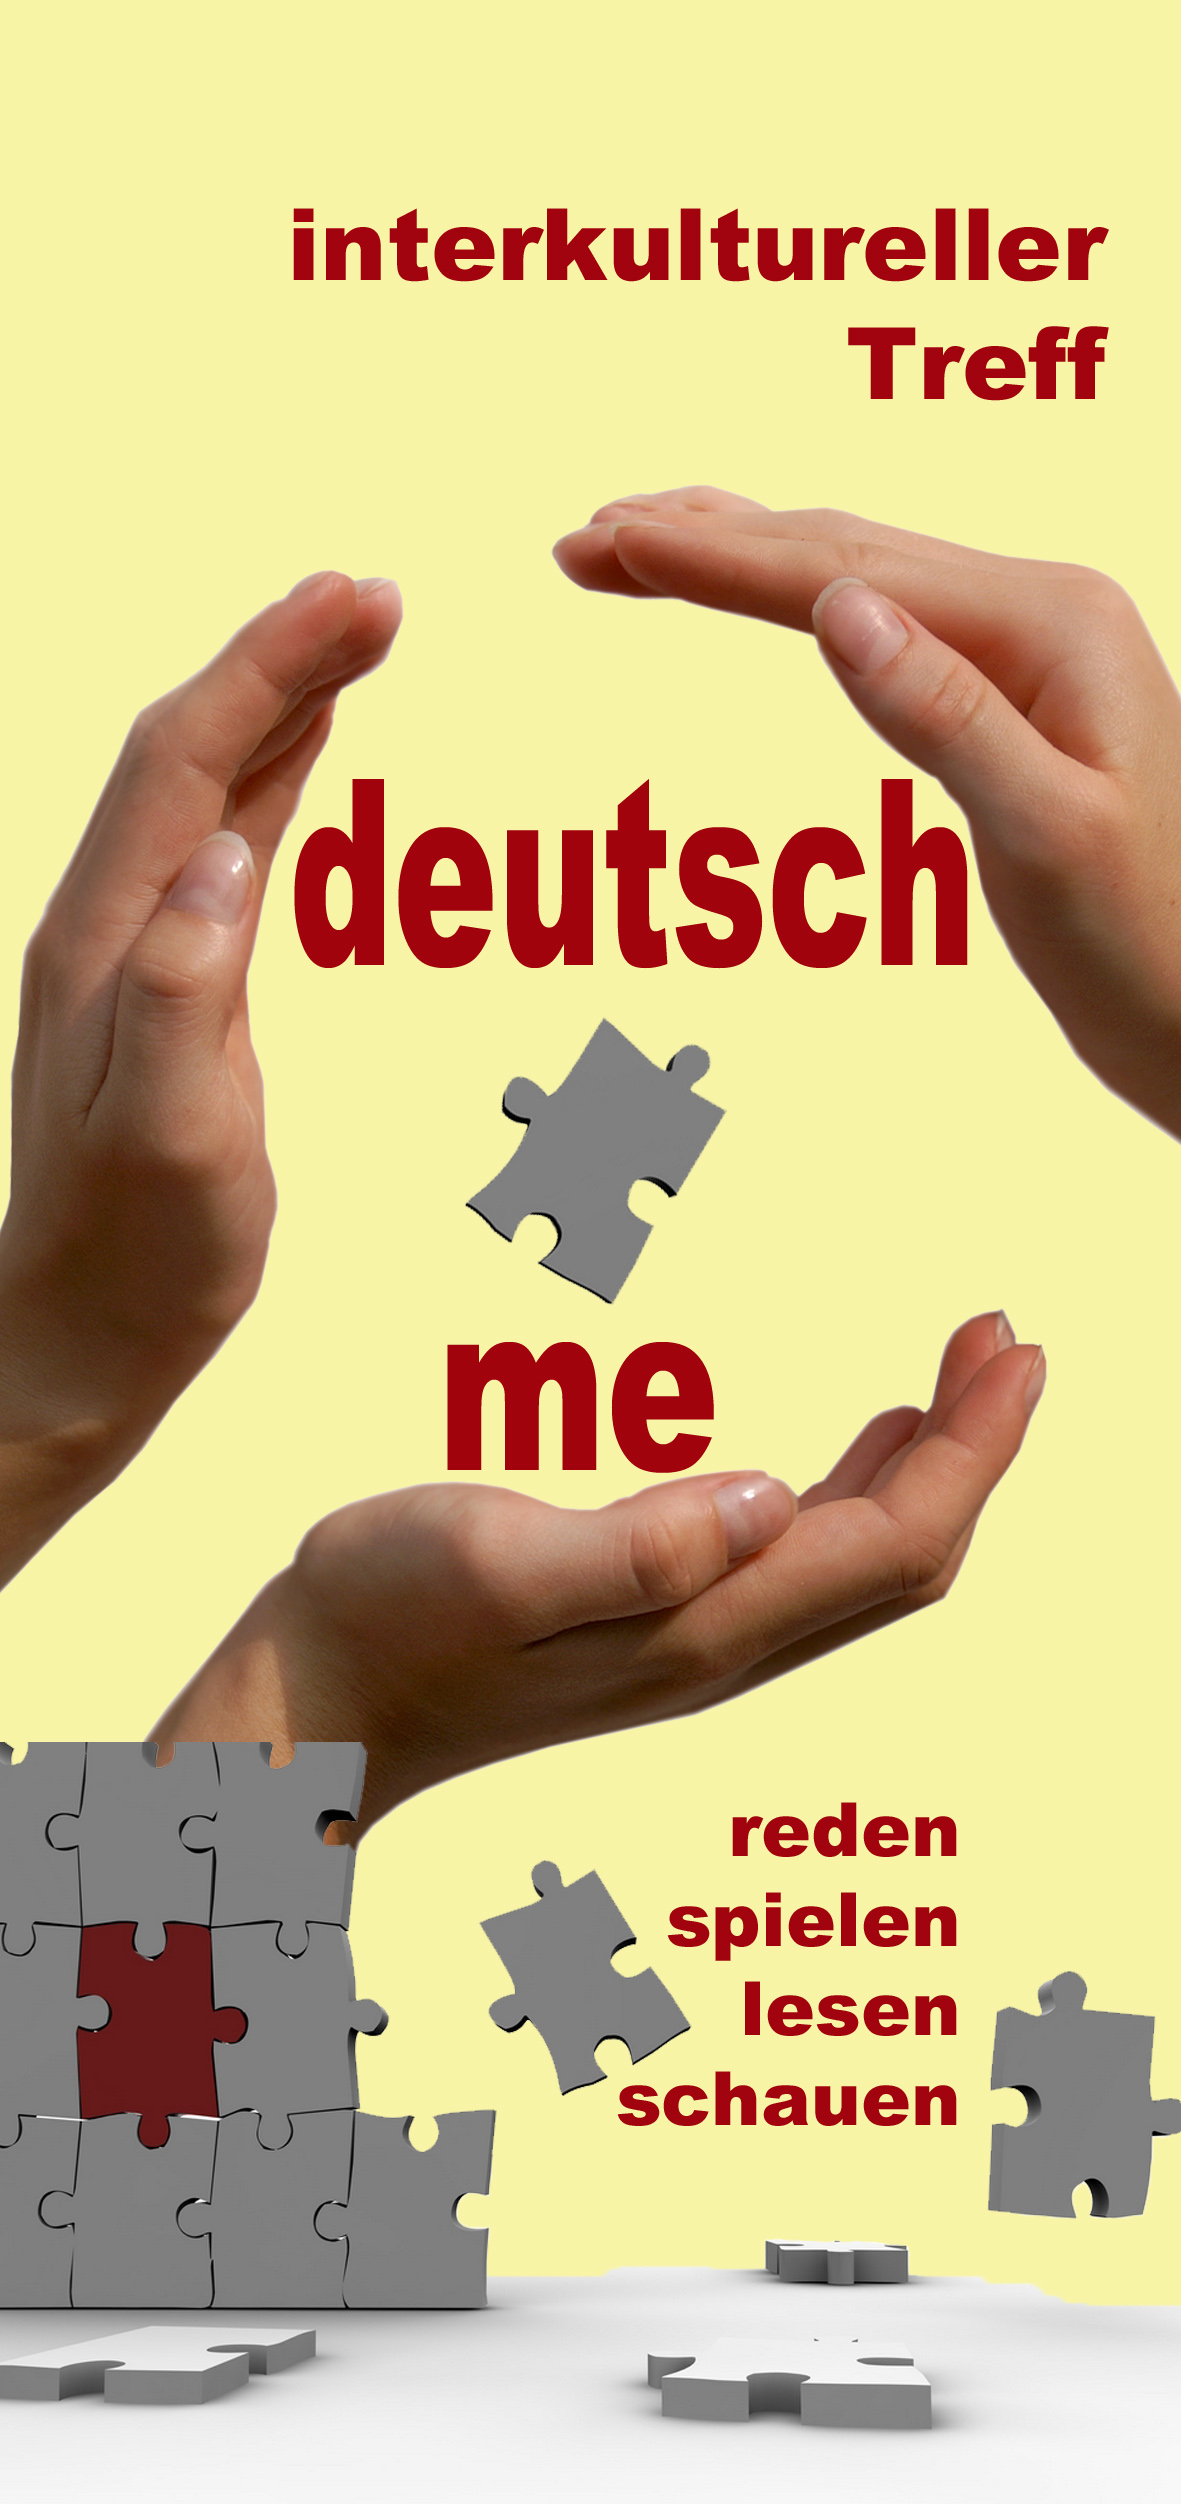 "Deutsch me"